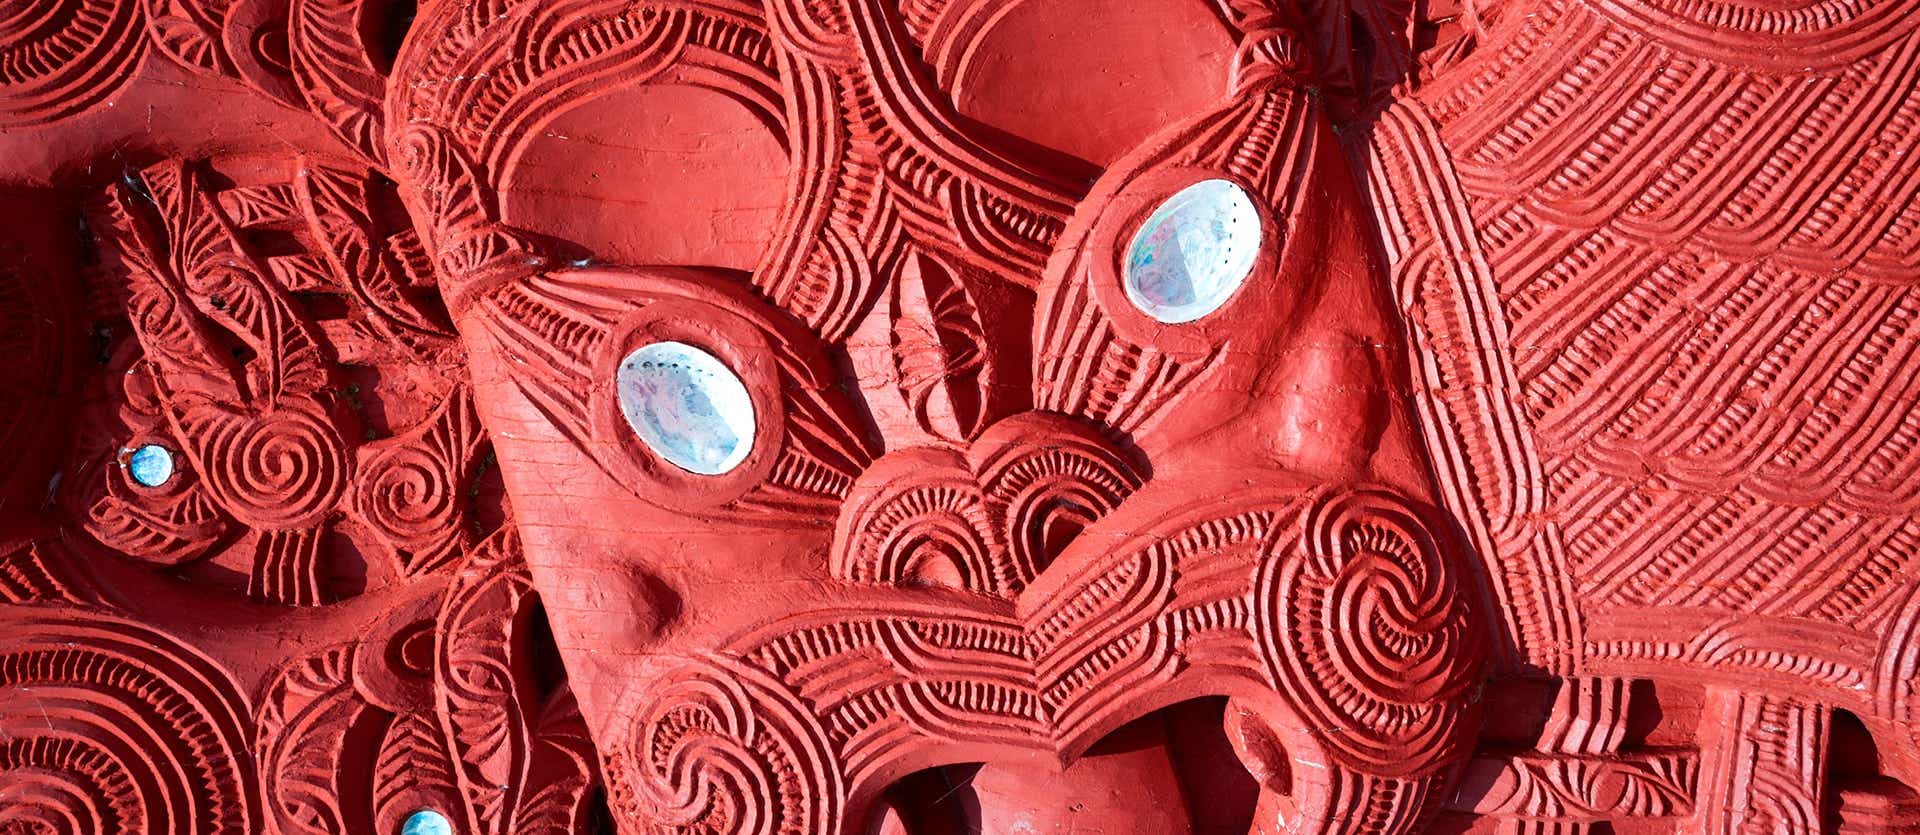 Maori Carving <span class="iconos separador"></span> Rotorua